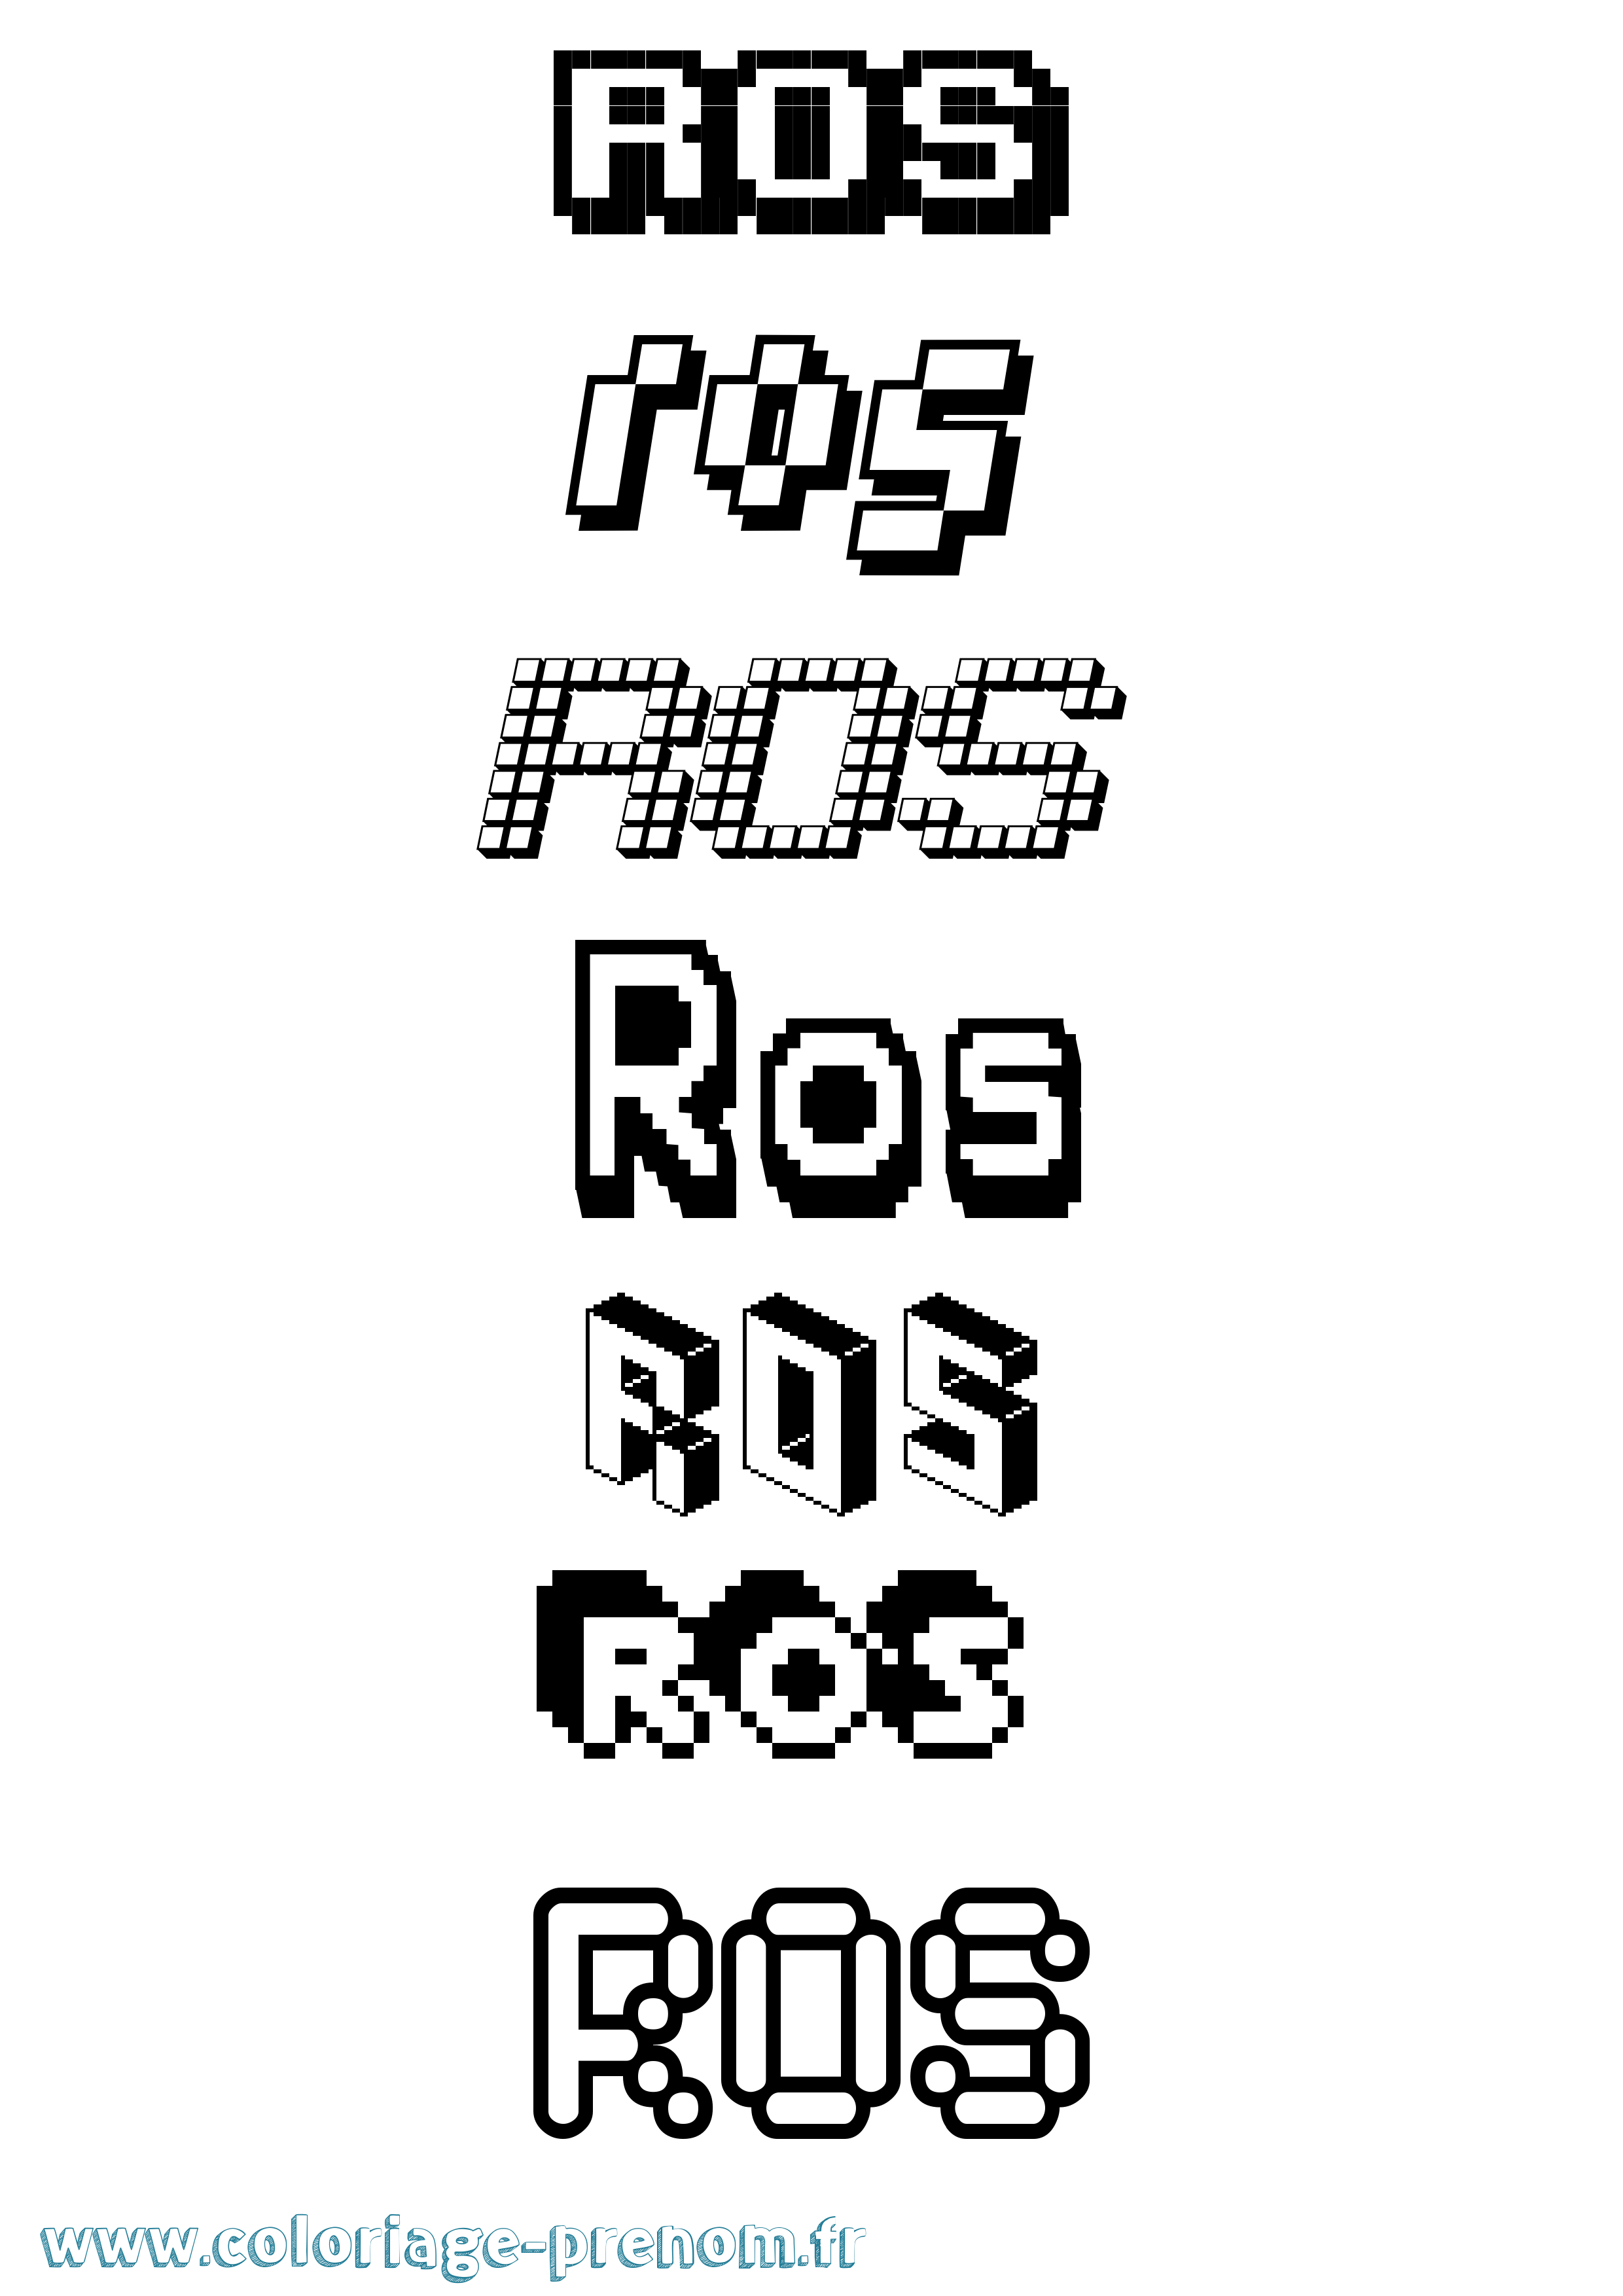 Coloriage prénom Ros Pixel